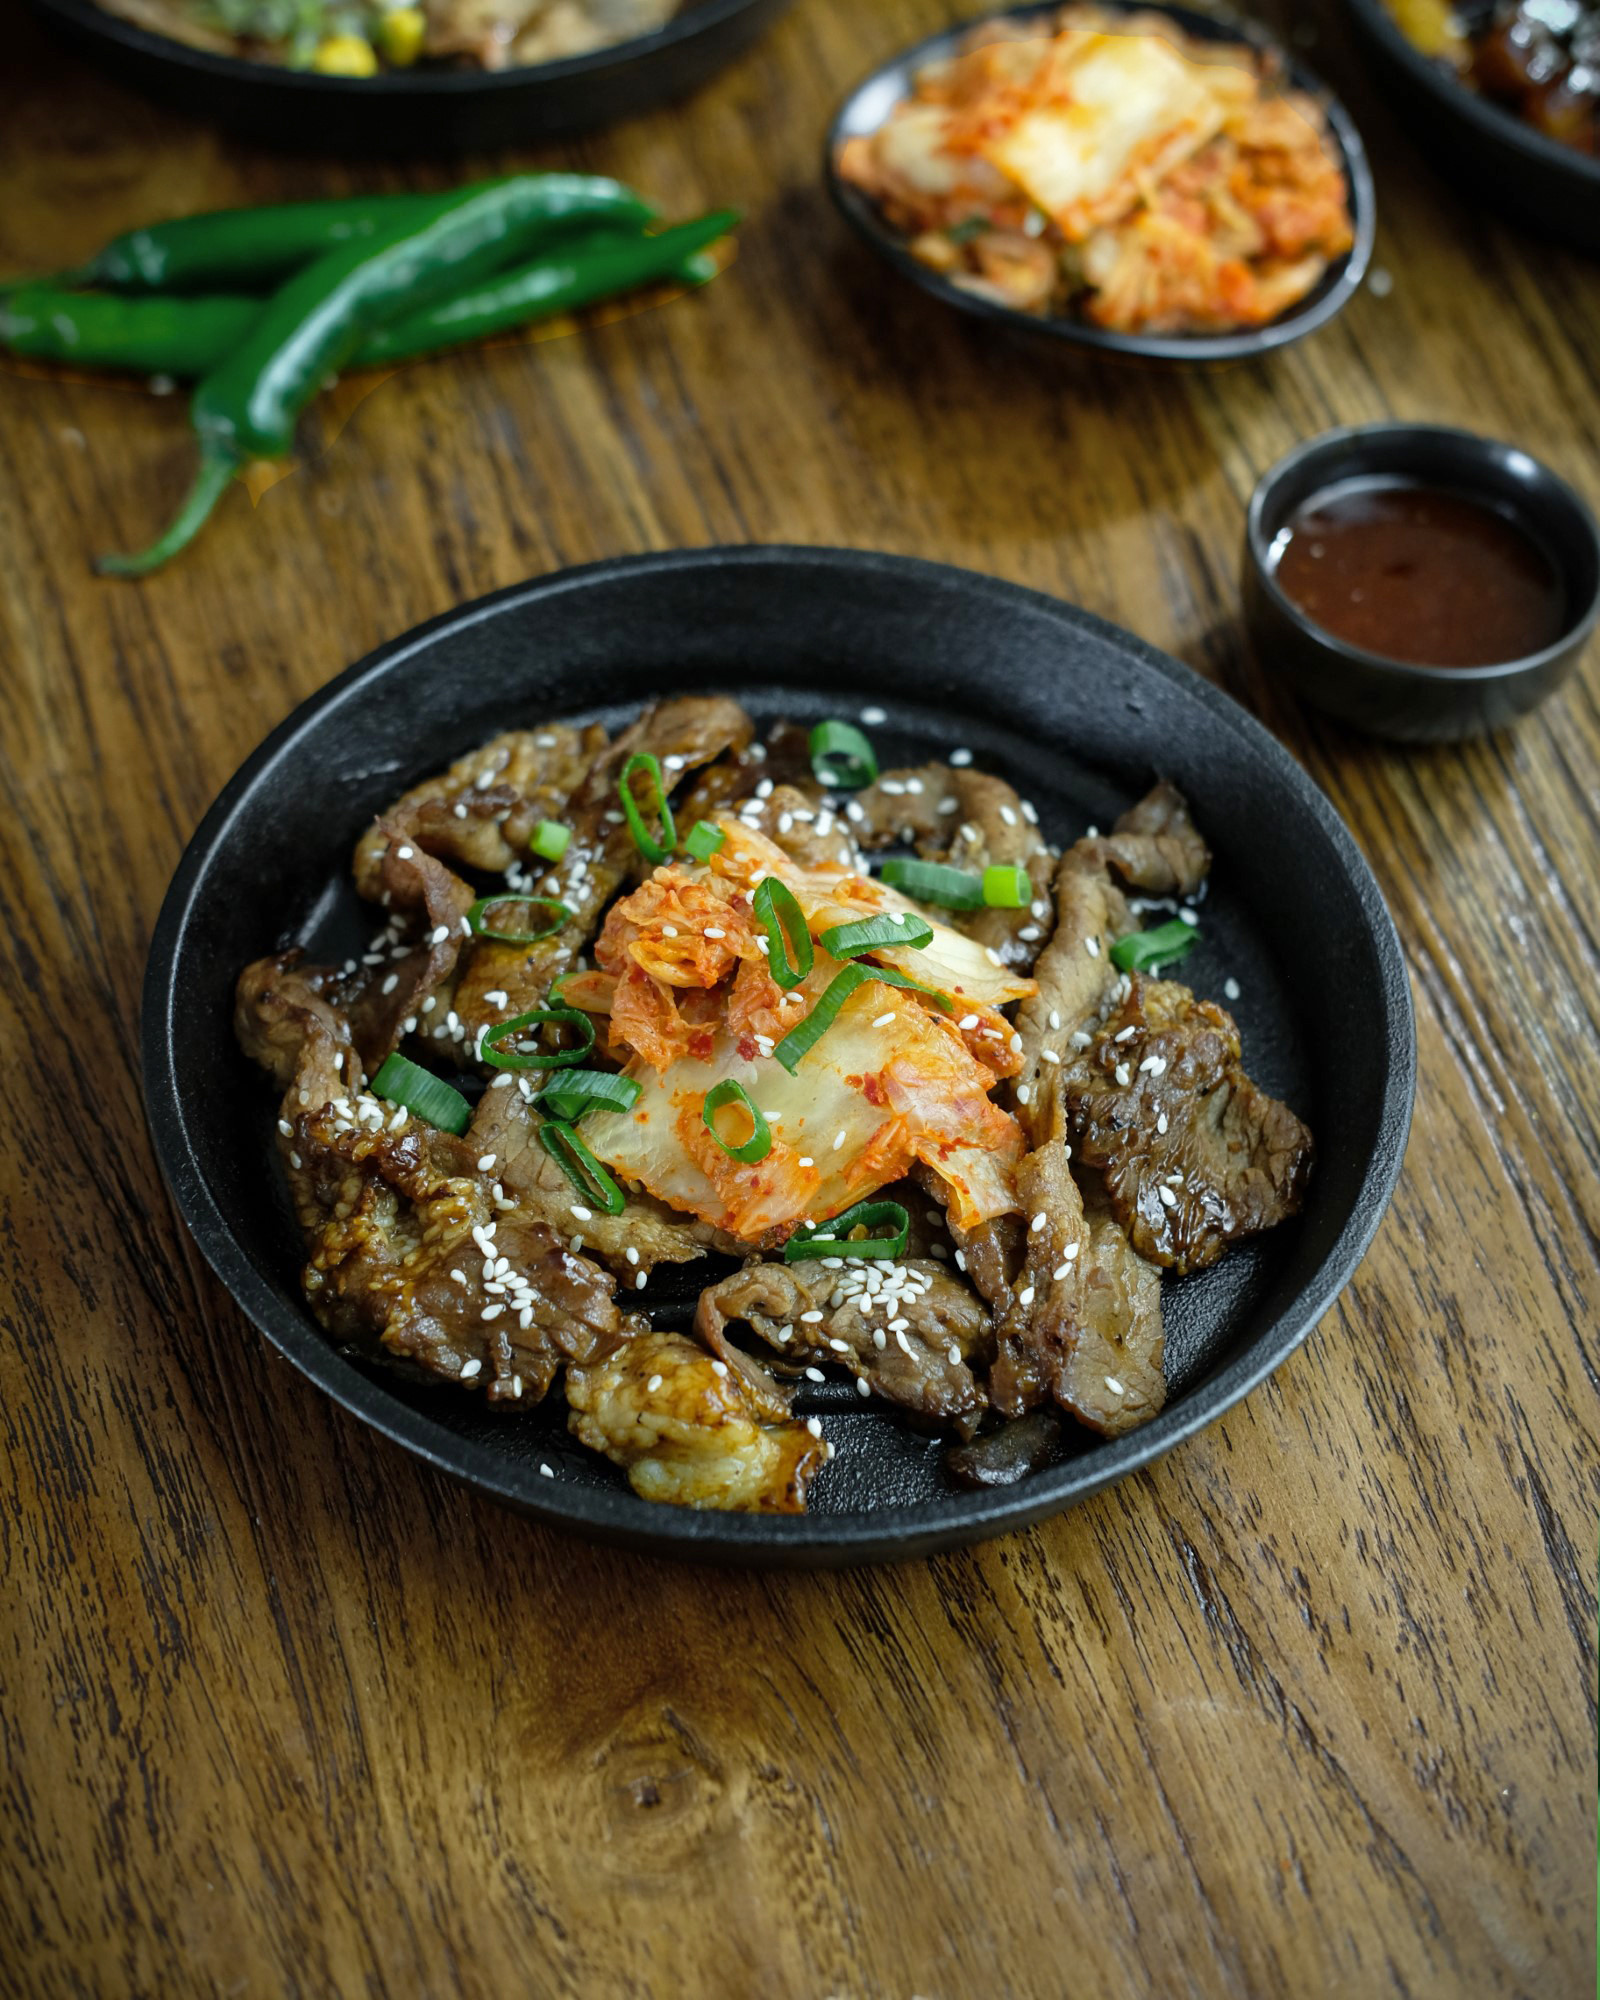 Busan Grill Pan + Food 3_Edit